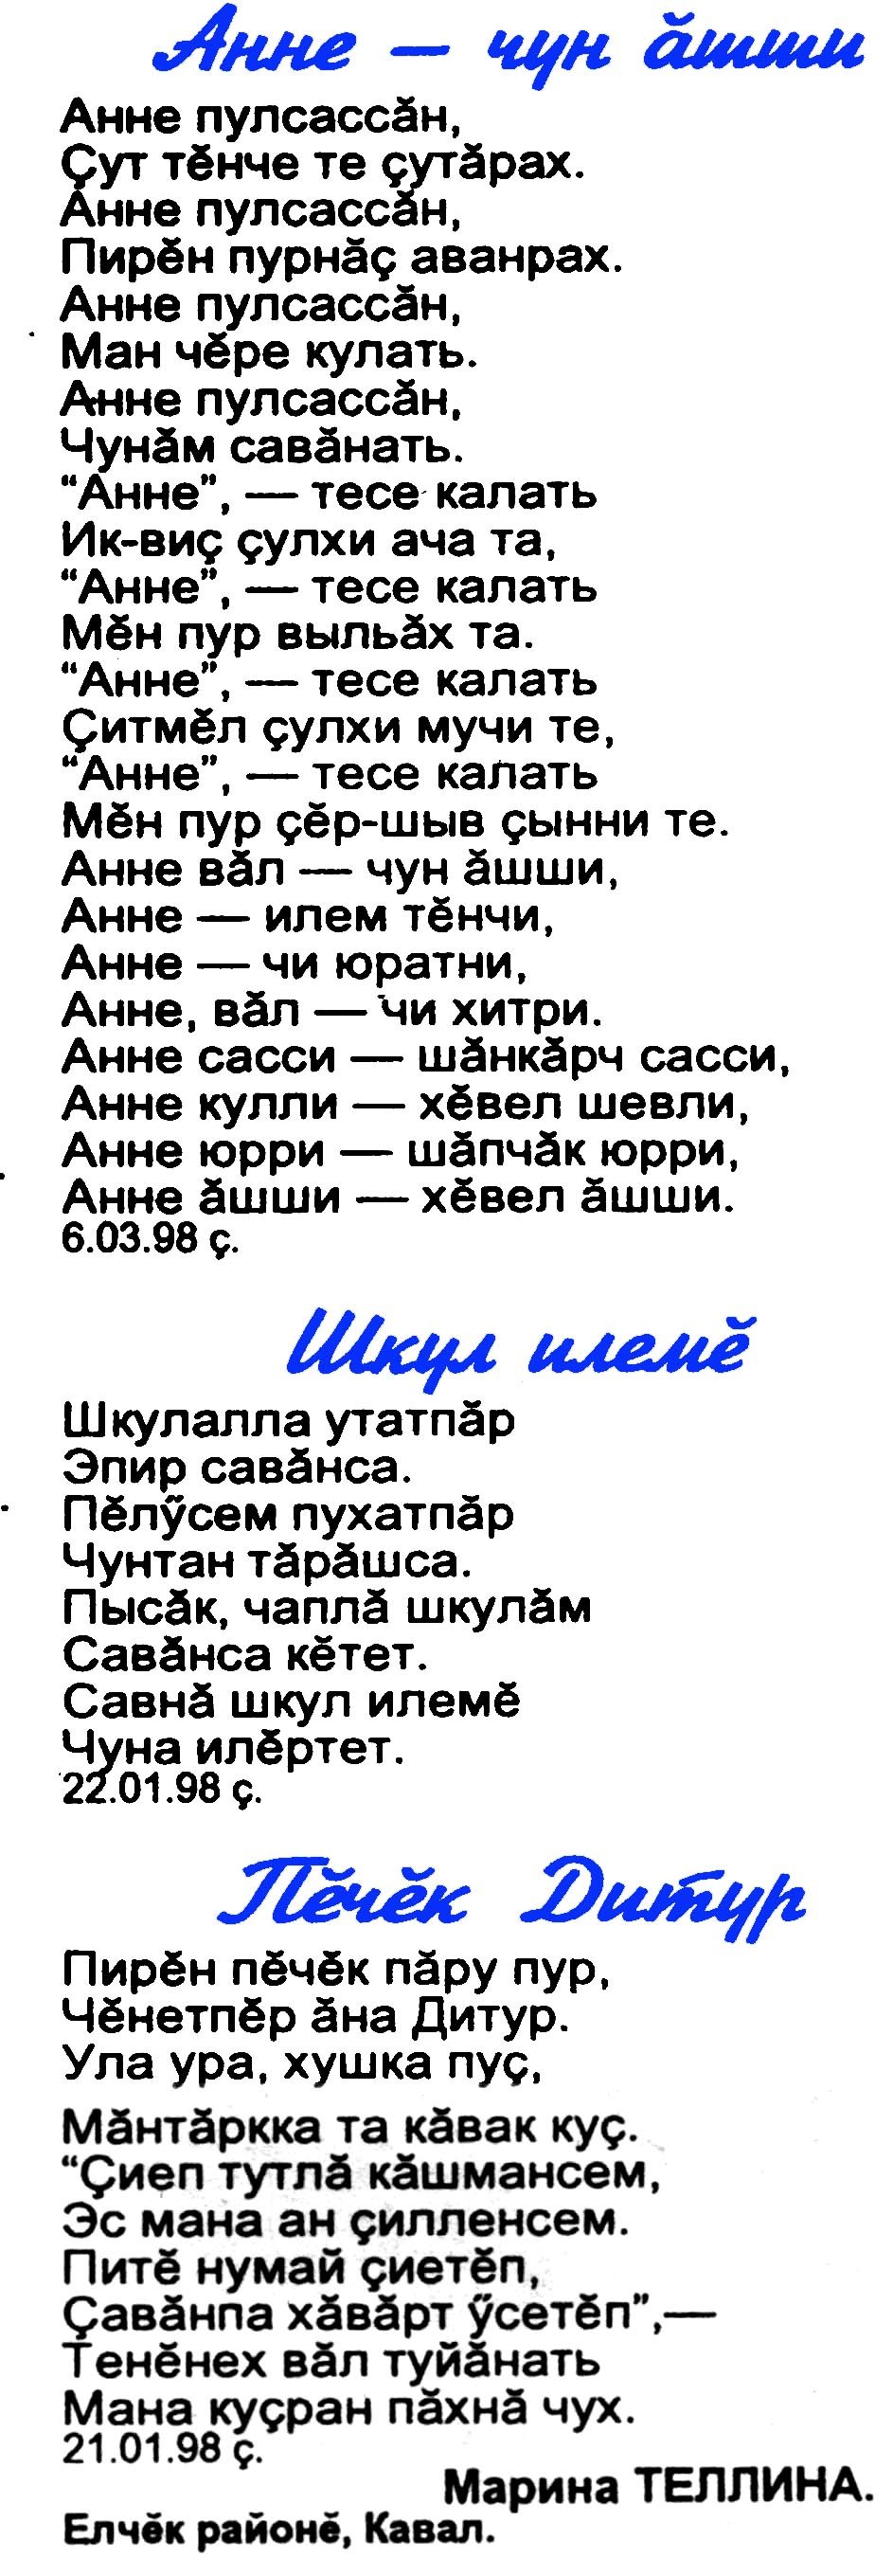 Маме стих на чувашском. Стихи на чувашском языке. Стихи на чувашском языке для детей. Стихотворение на чувашском языке. Пожелания на чувашском языке.